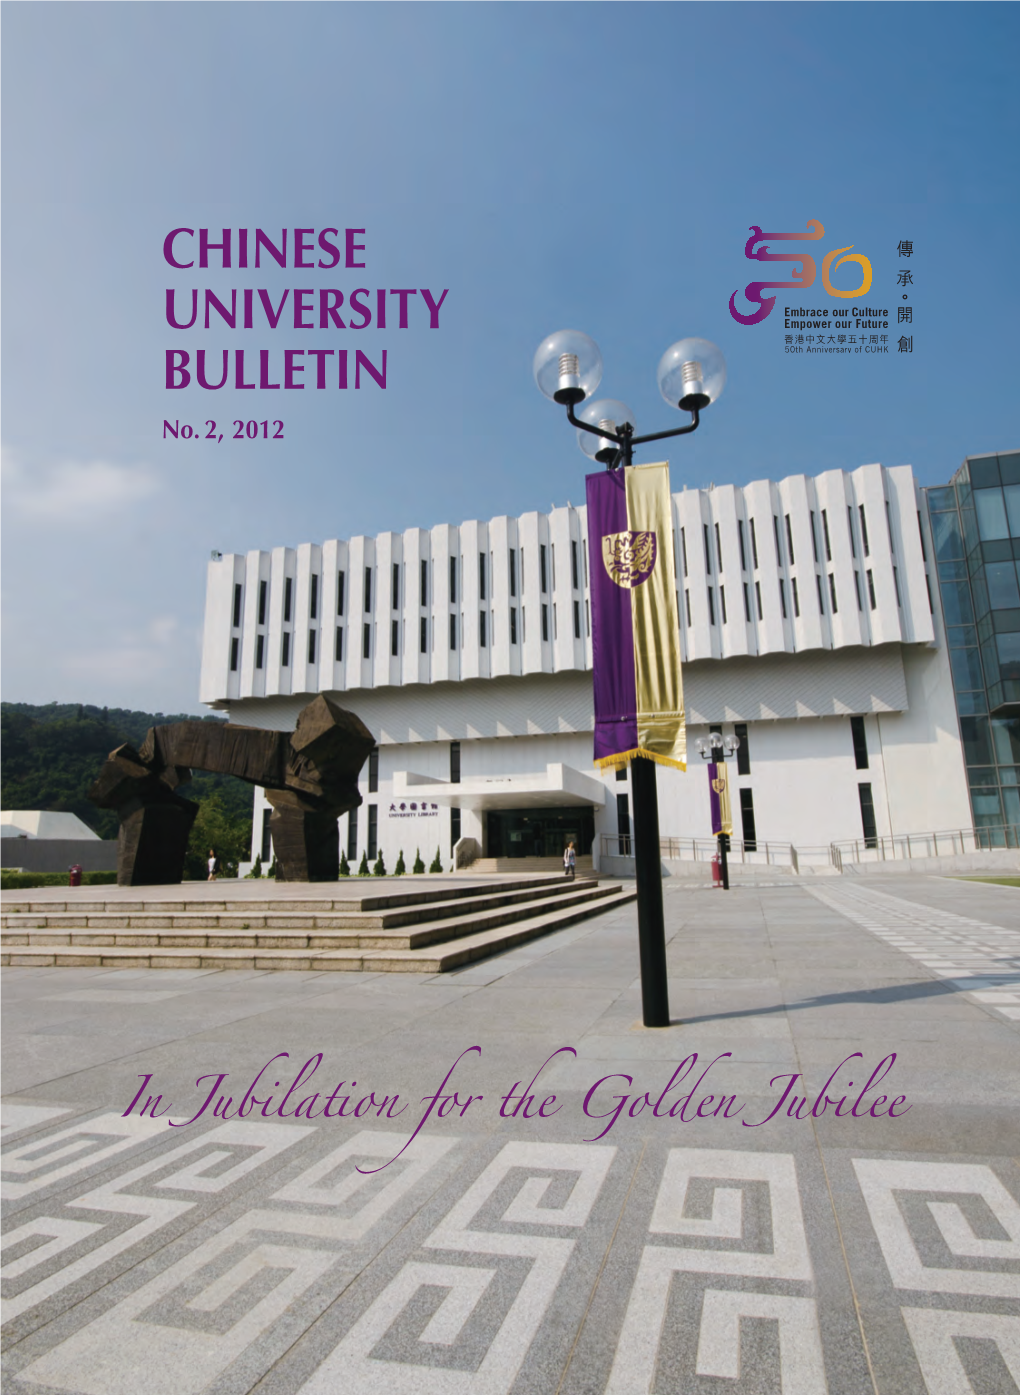 Chinese University Bulletin No